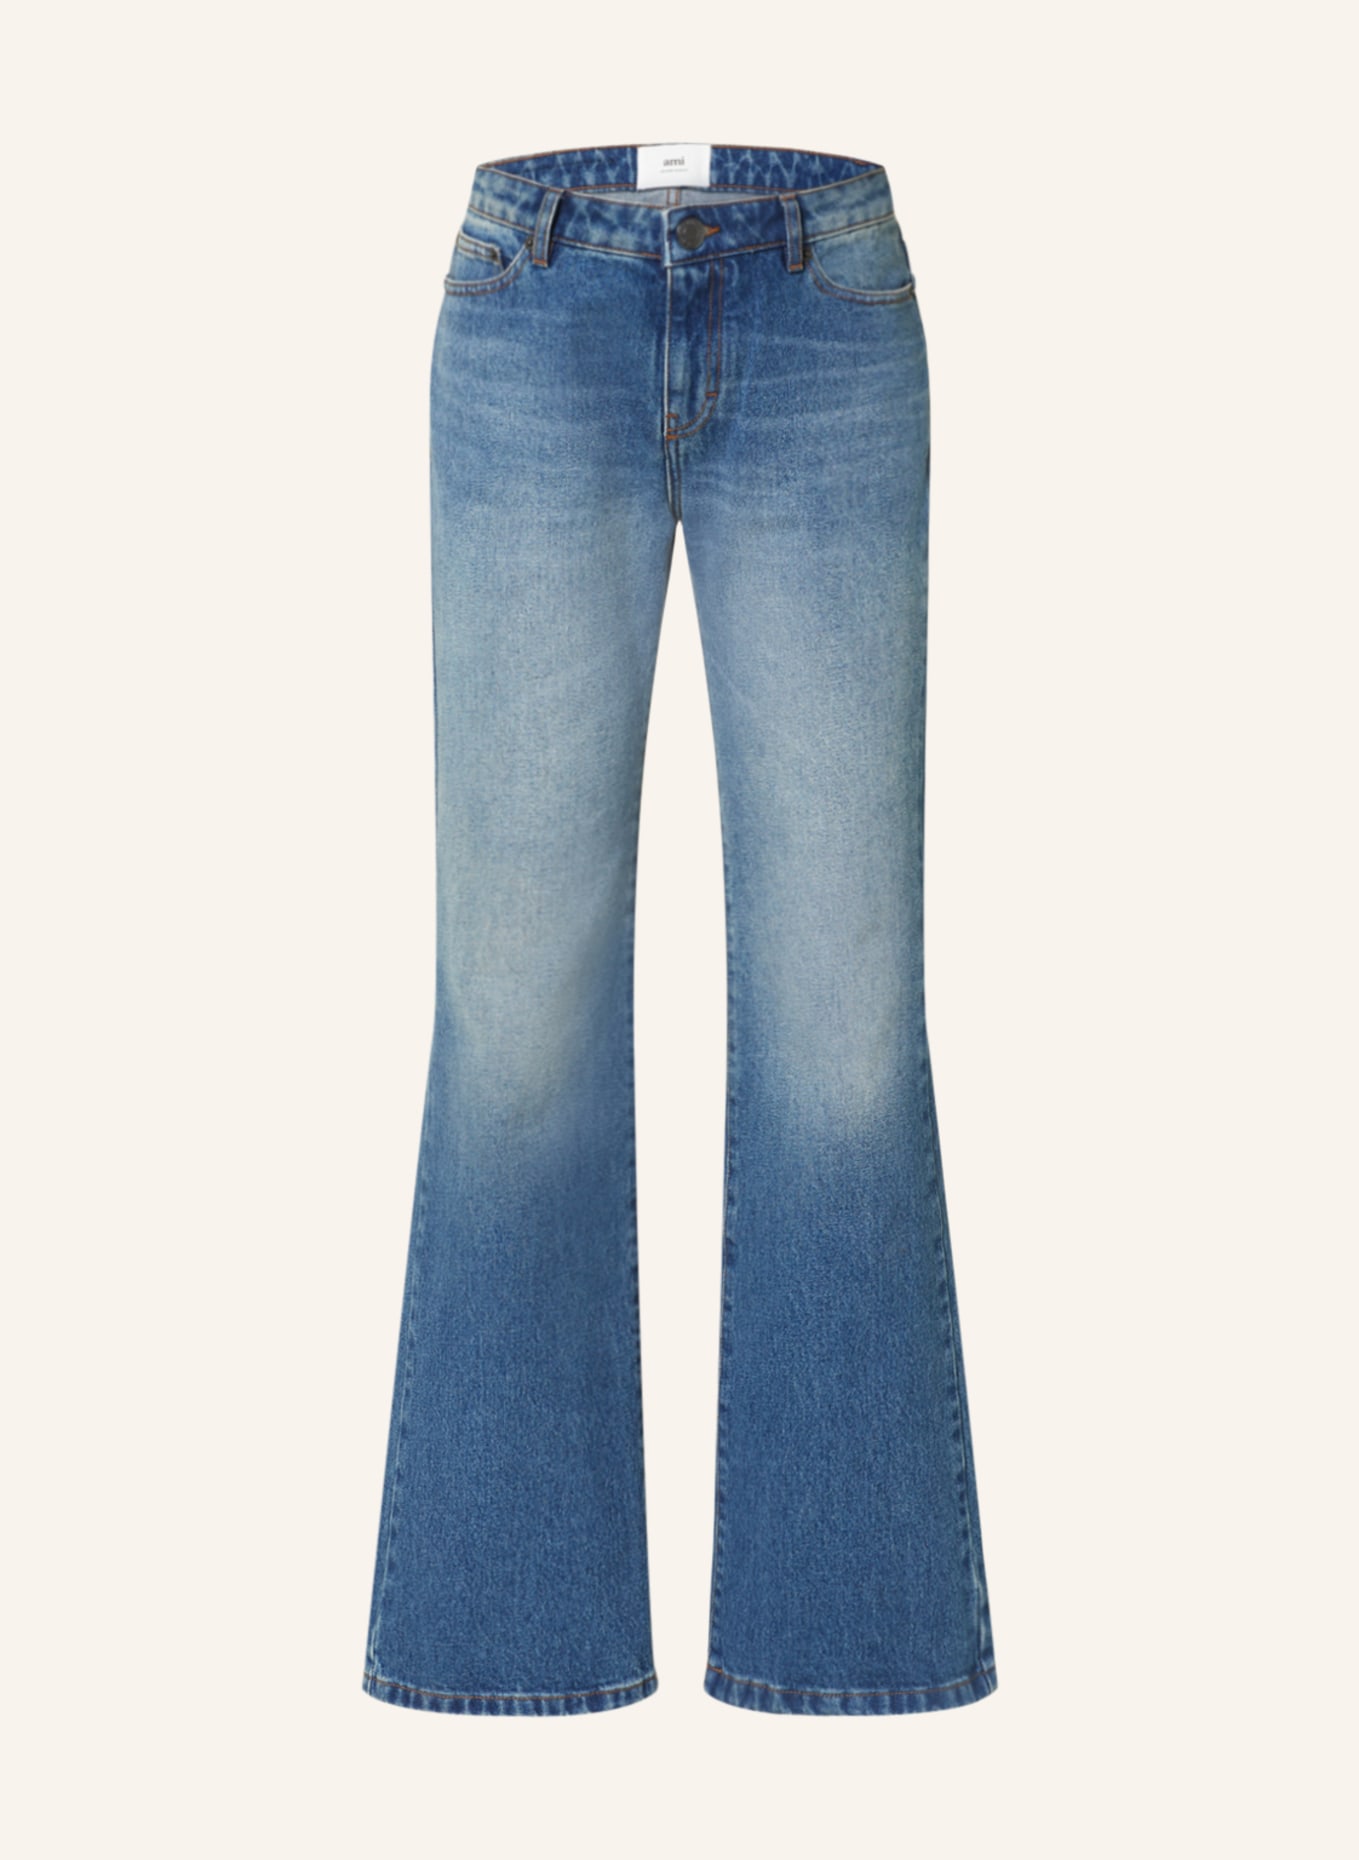 AMI PARIS Bootcut Jeans, Farbe: 480 used blue (Bild 1)